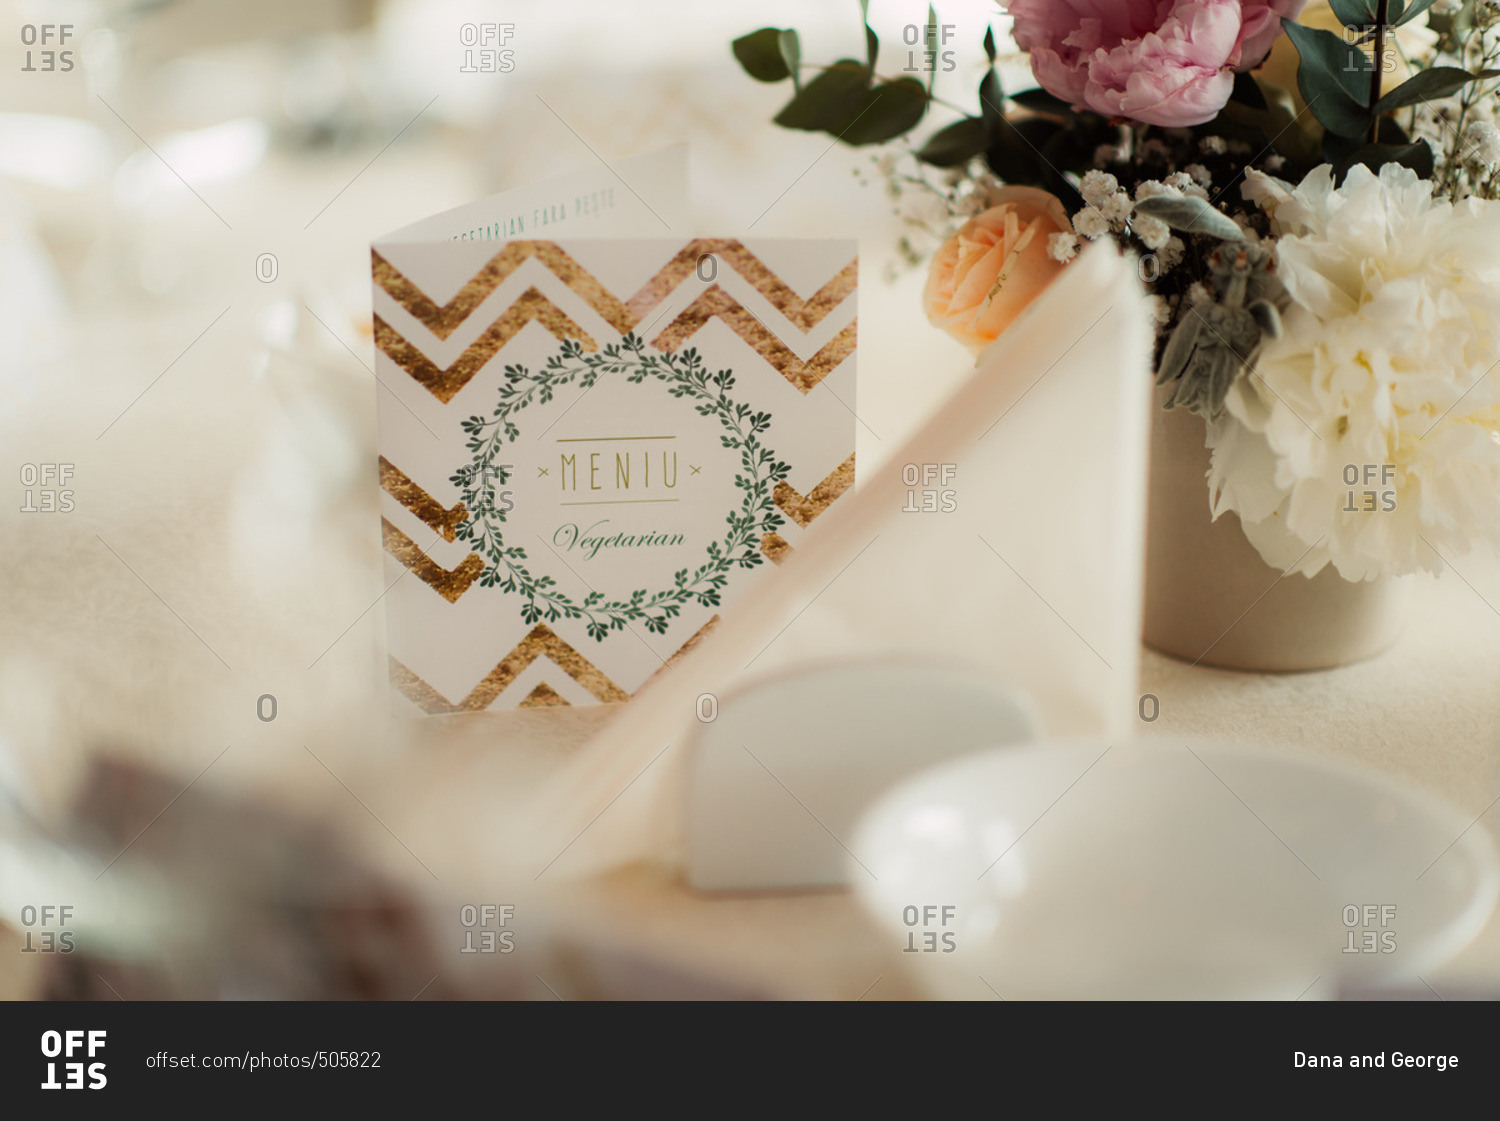 Menu card on wedding table